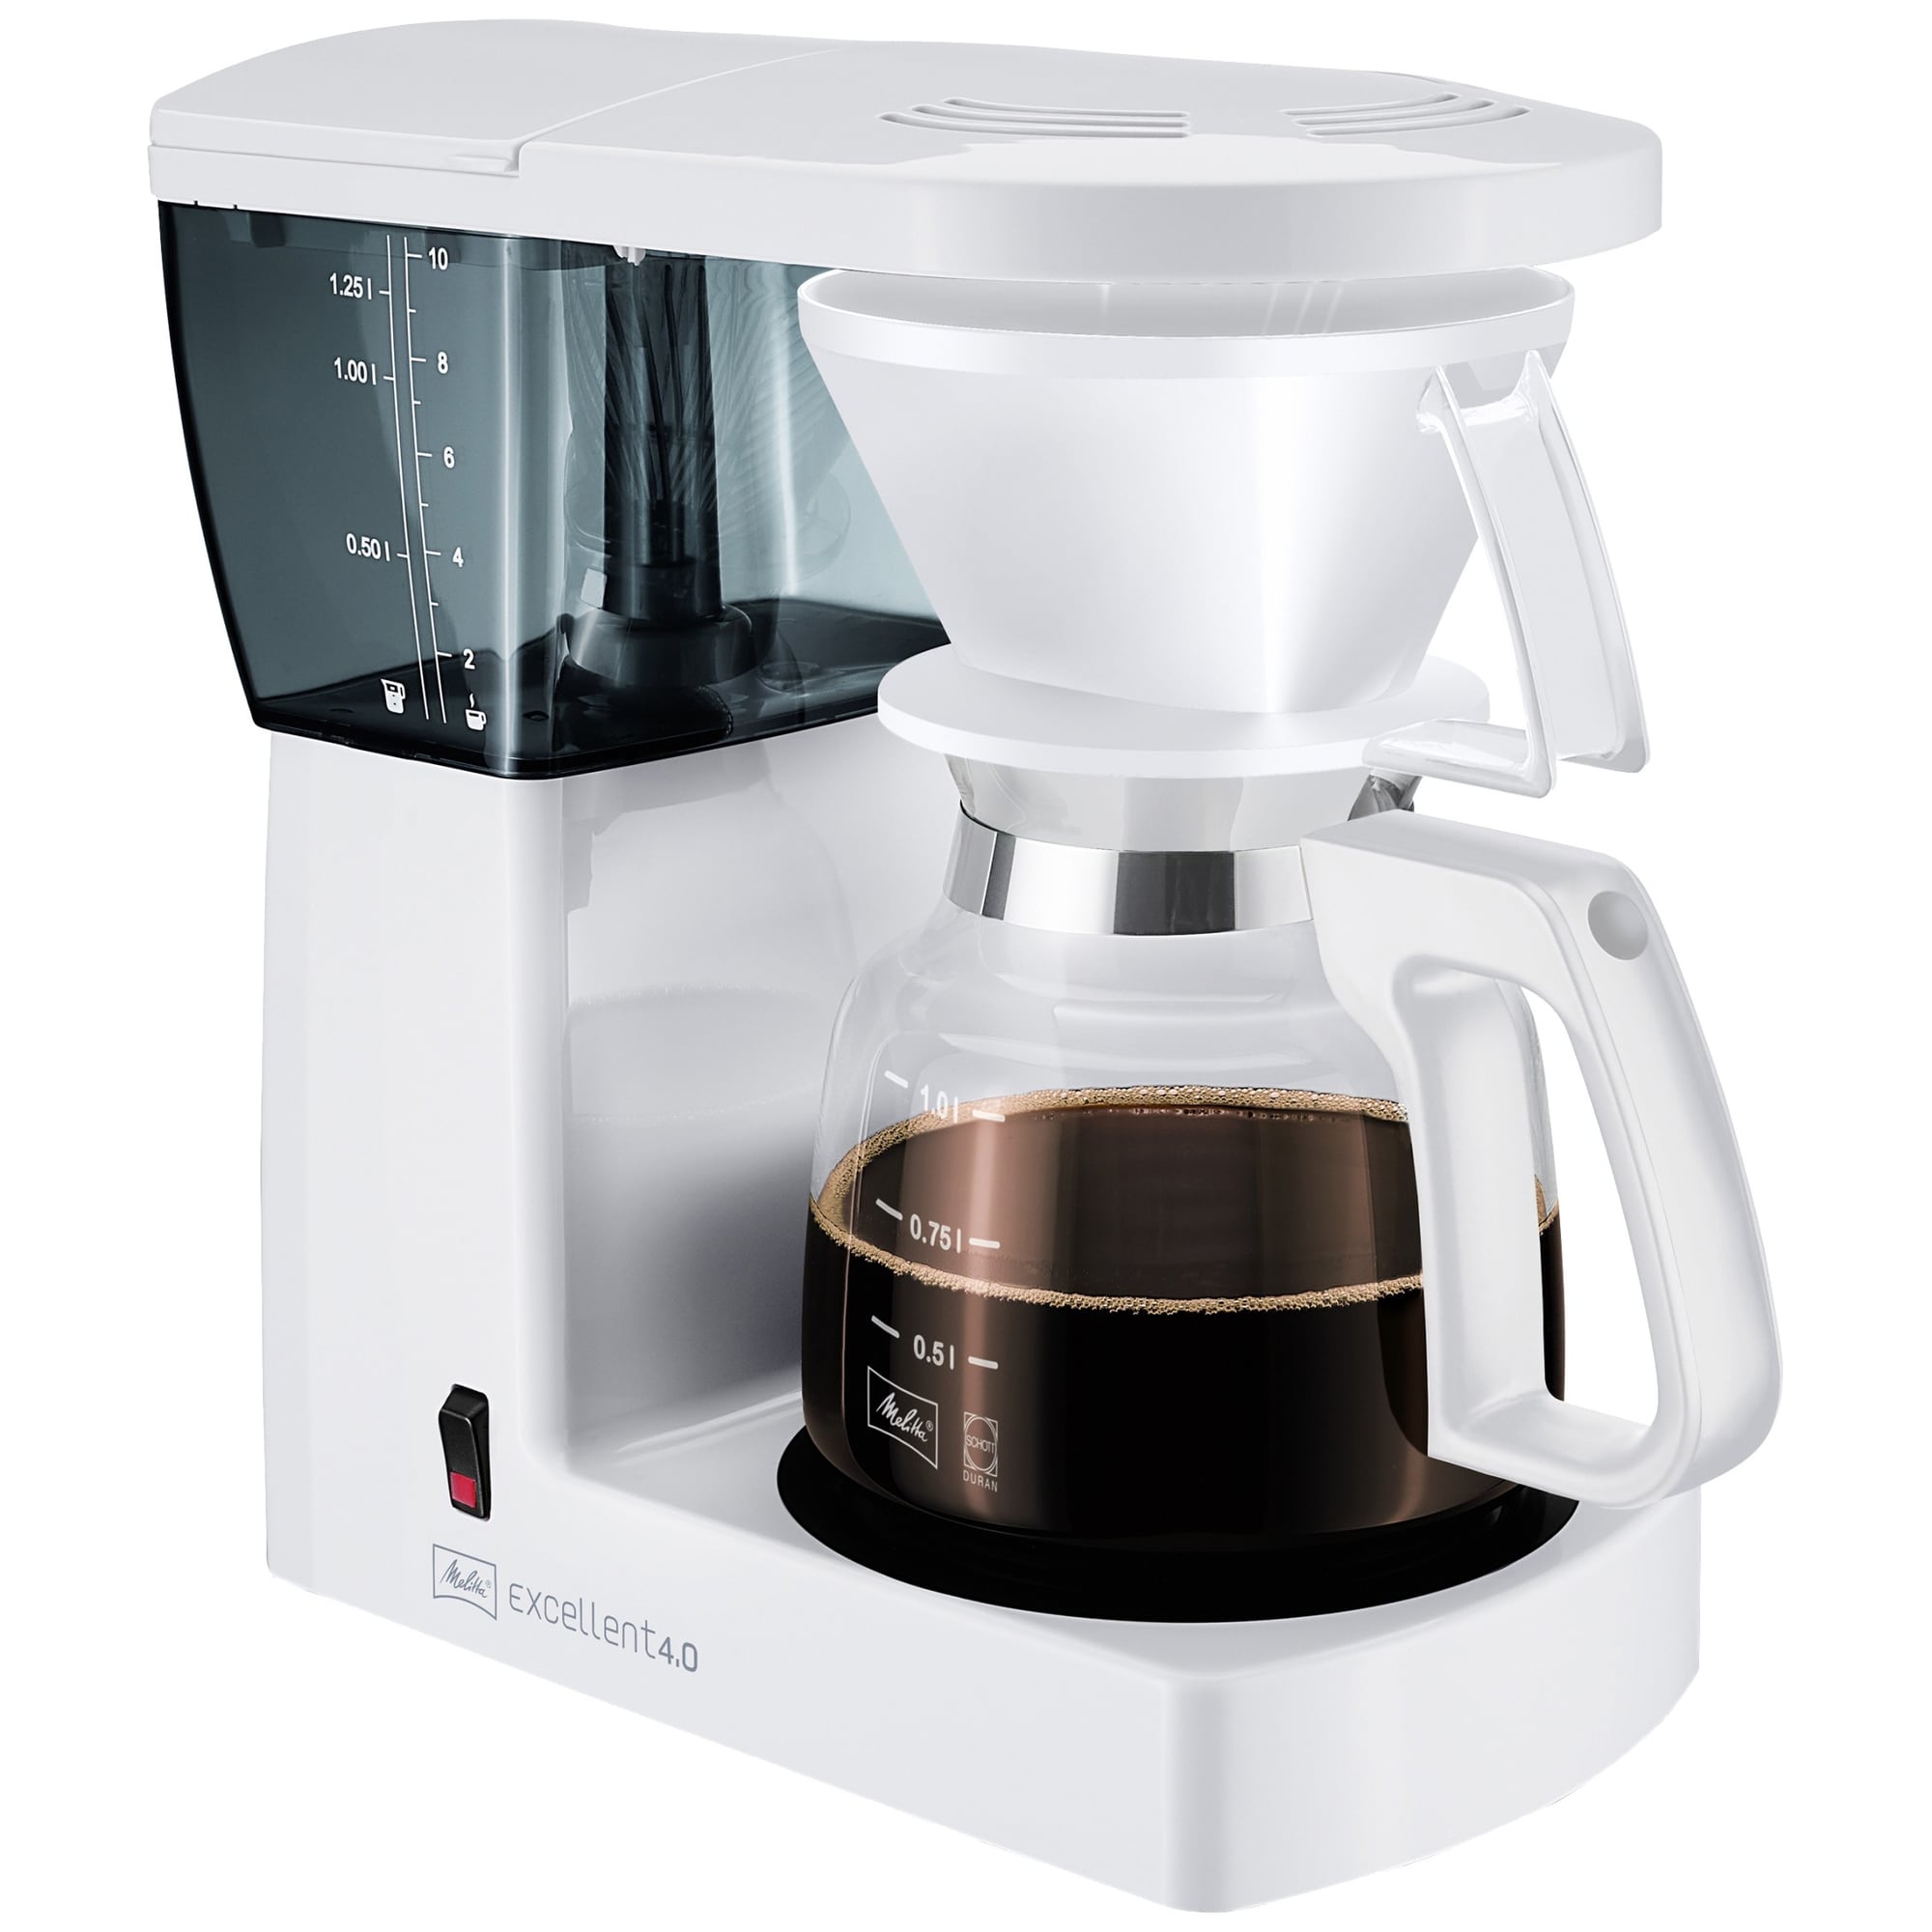 Melitta Excellent 4.0 kaffemaskine 21520 (hvid) |